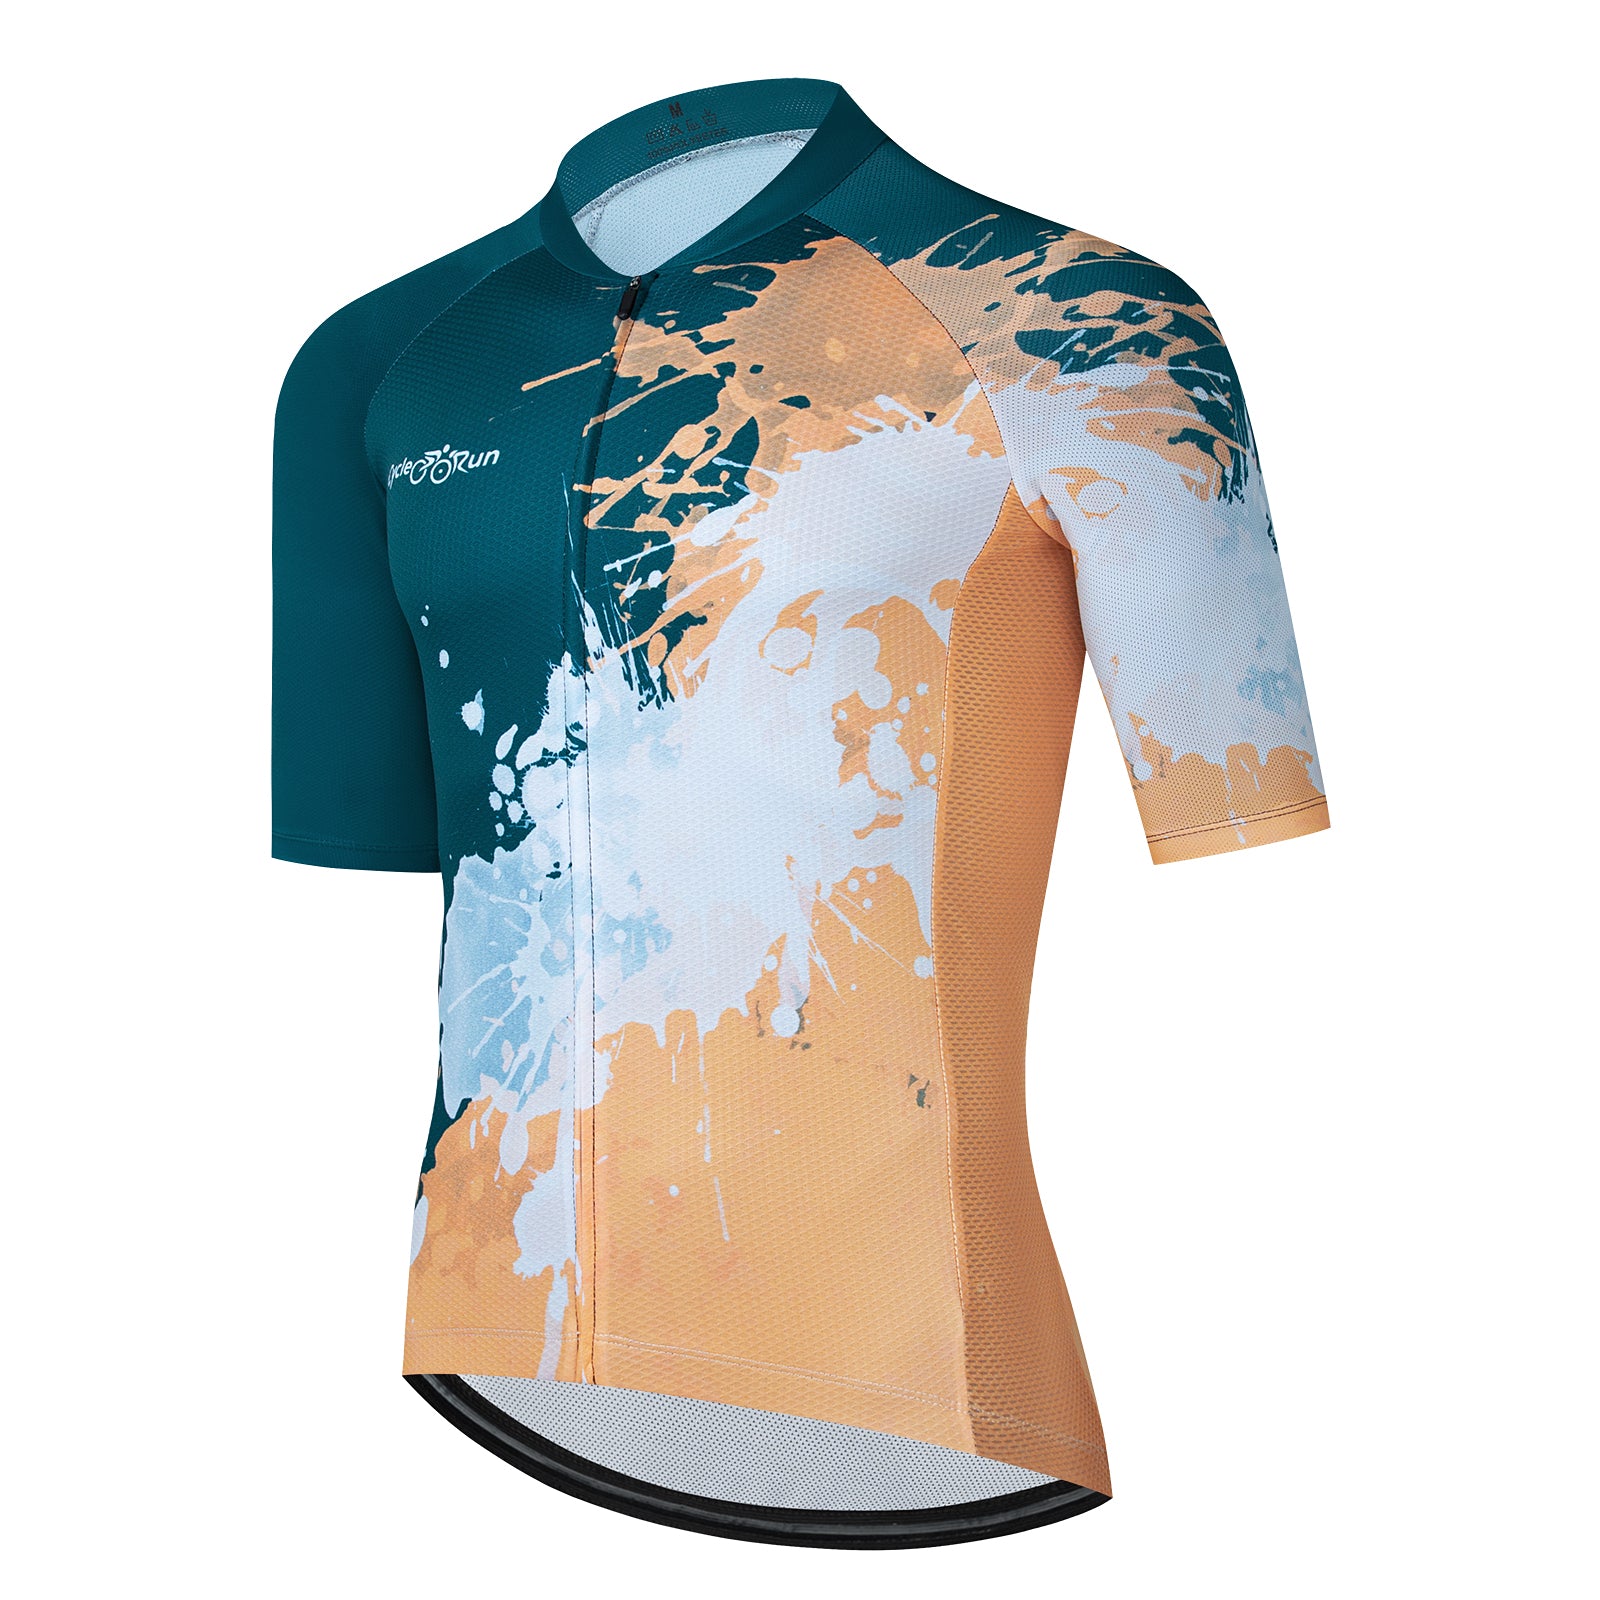 Body color paint splash cycling jersey